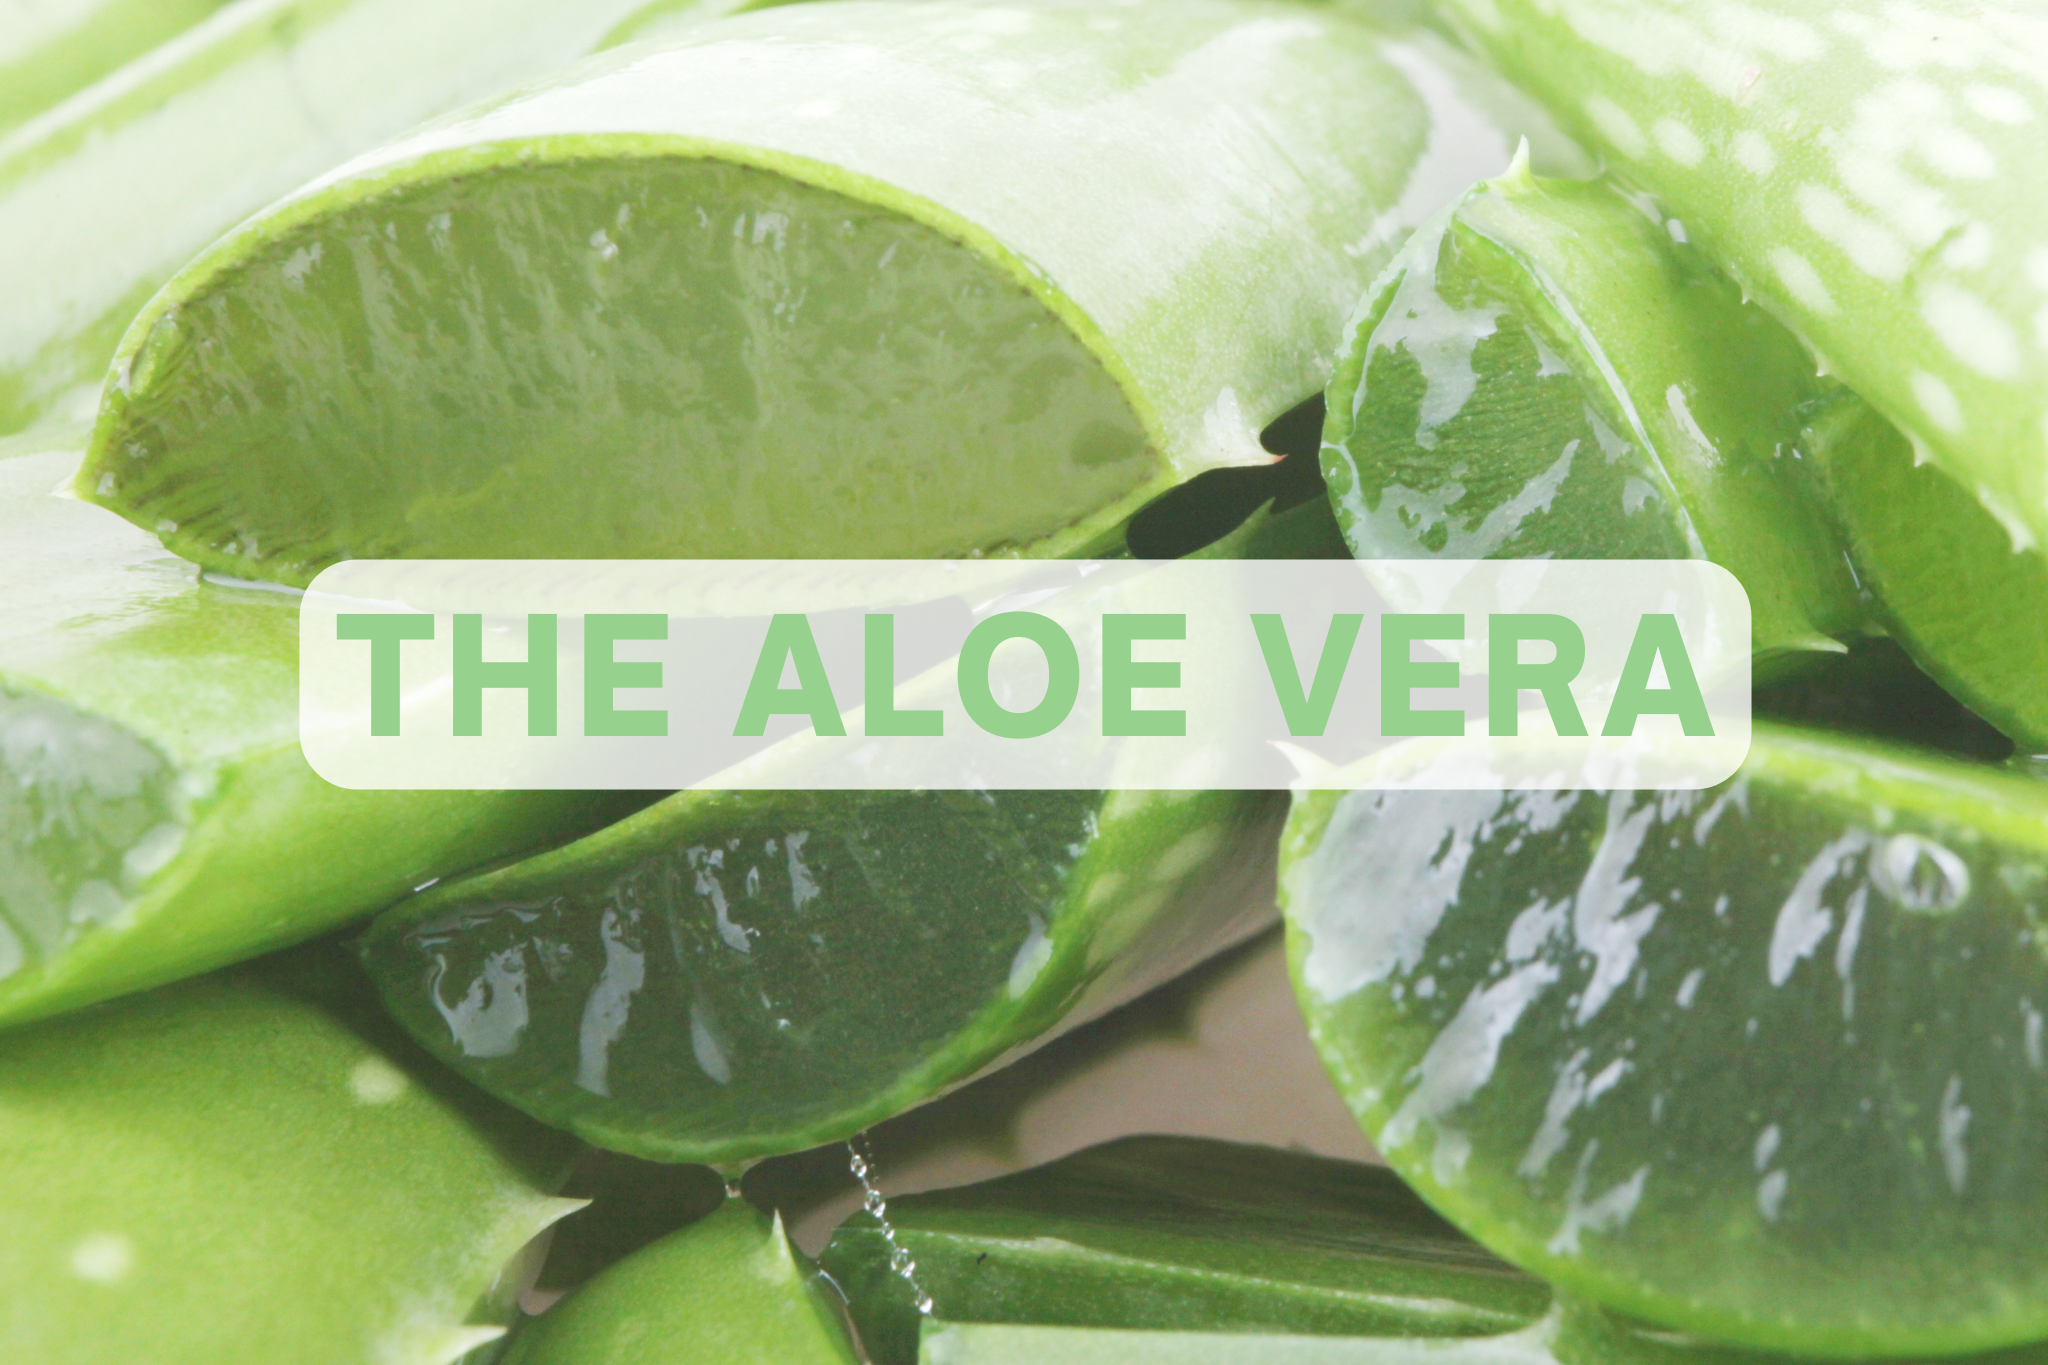 The Aloe Vera